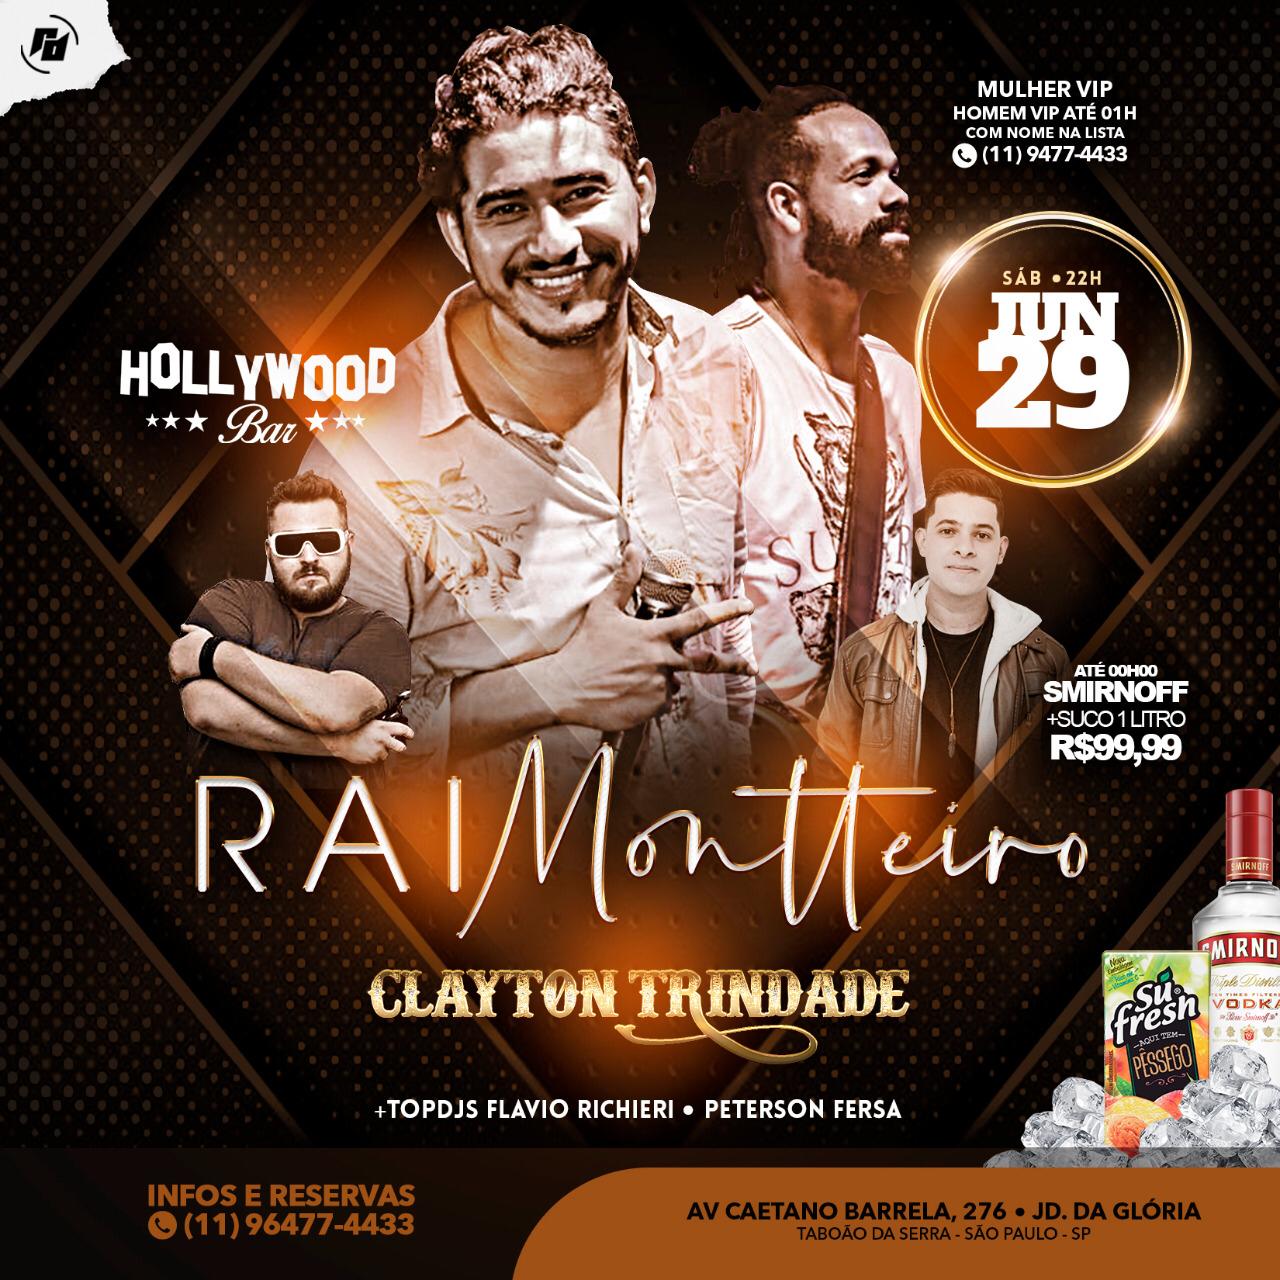 Hollywood Bar: Sábado 29/06 - Rai Montteiro e Clayton Trindade